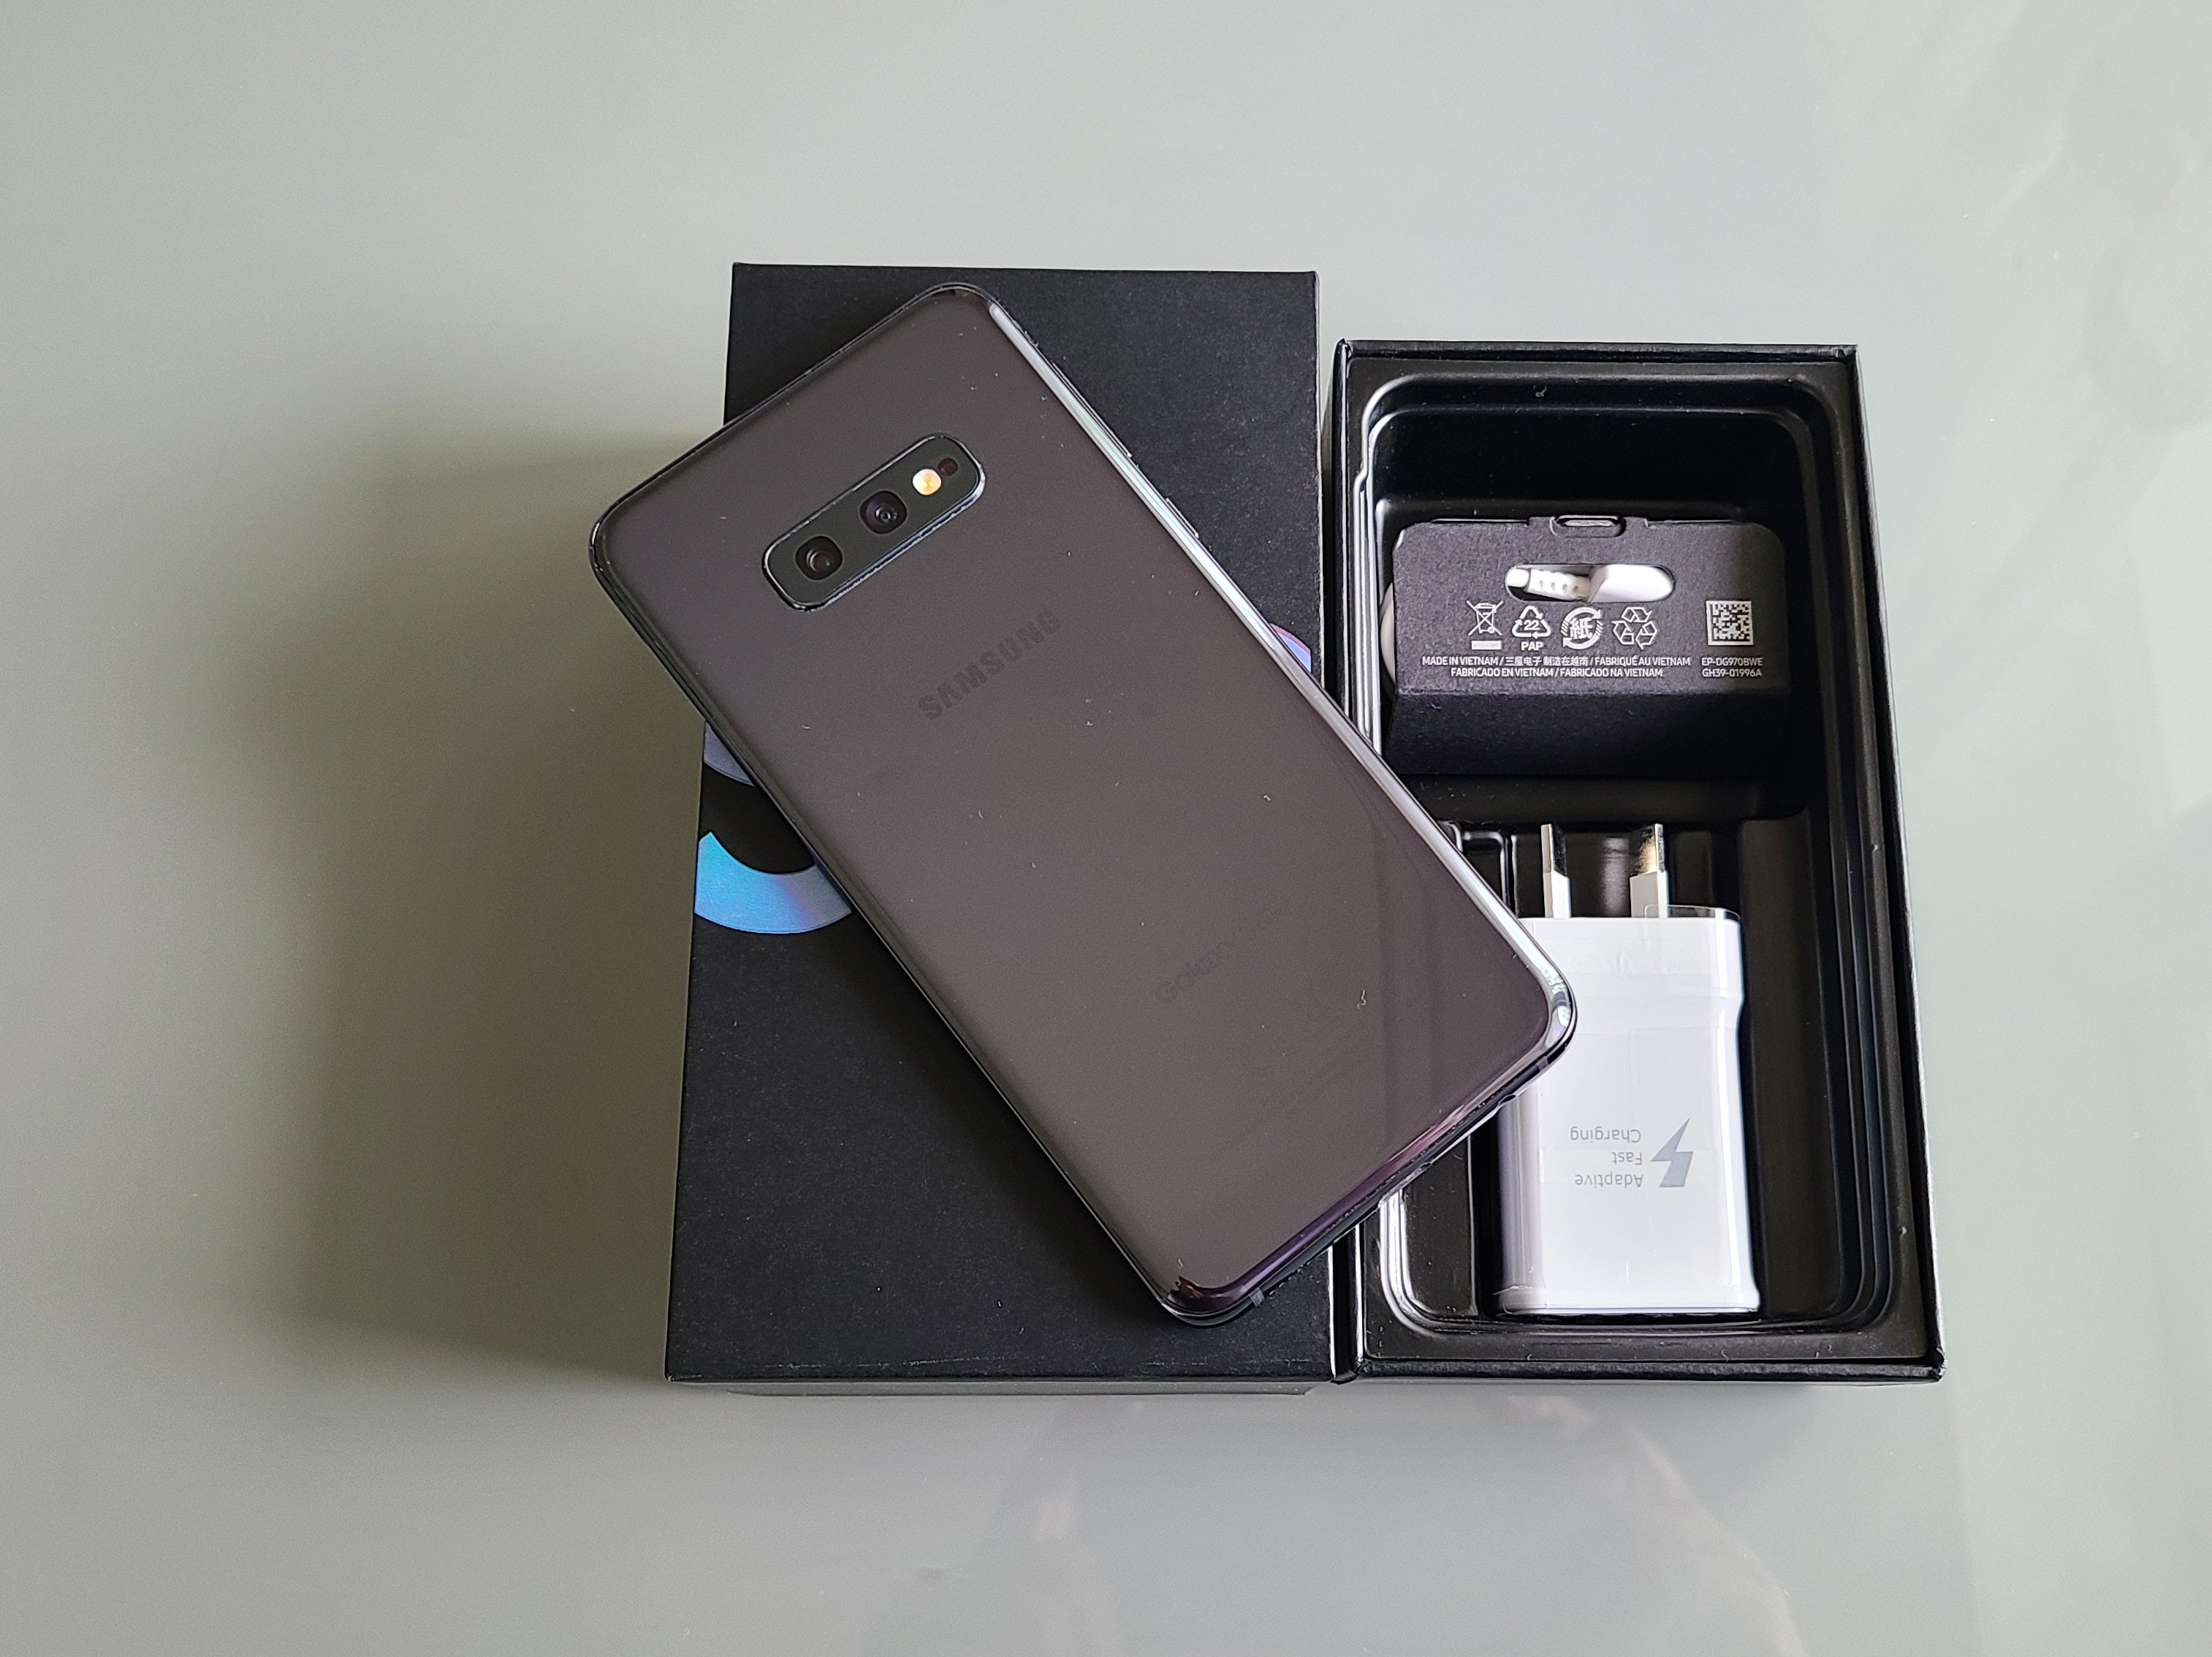 Samsung Galaxy S10e Prism Black 256GB SM-G970U (As New) New Case, Glass Screen Protector & Shipping